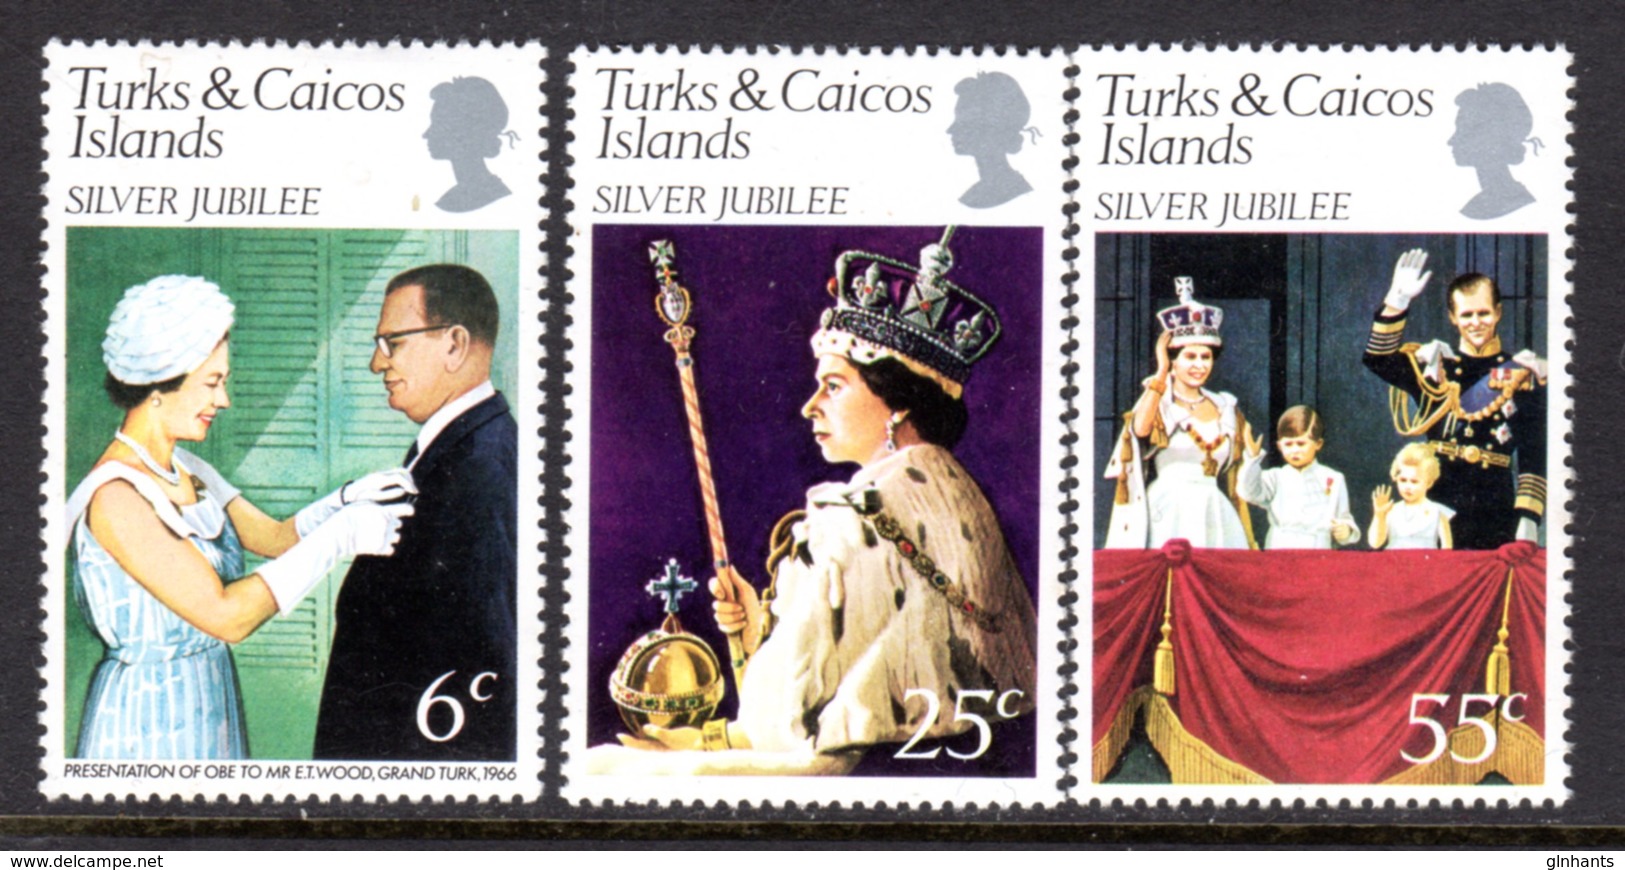 TURKS & CAICOS ISLANDS - 1977 SILVER JUBILEE SET (3V) FINE MNH ** SG 472-474 - Turks & Caicos